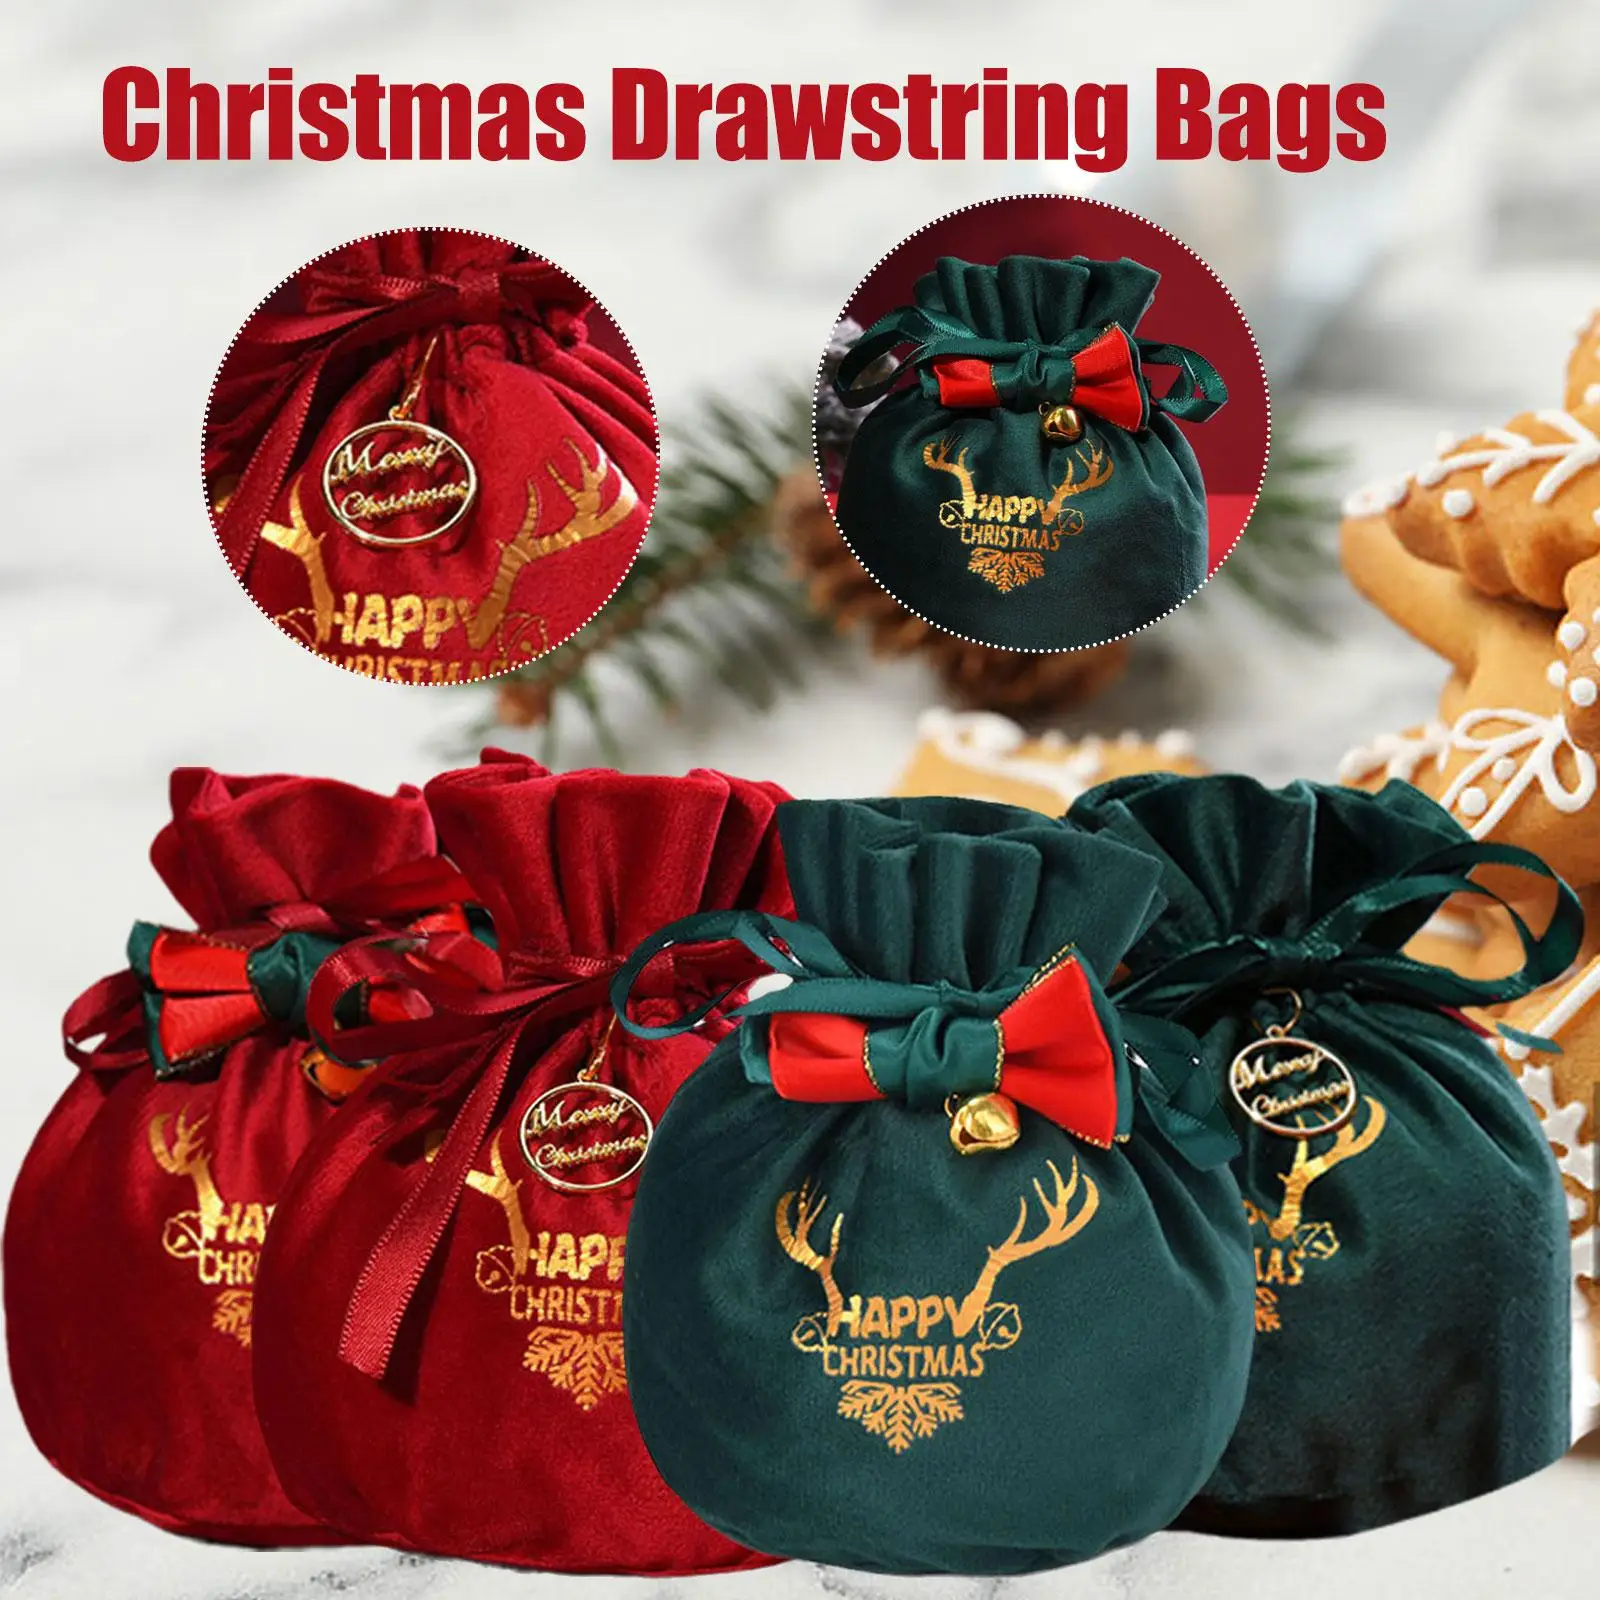 

1PC Christmas Reindeer Candy Gift Bag Velvet Santa Sacks Bag Decoration Party New Kids Year Gift Christmas Drawstring Favor A2J7